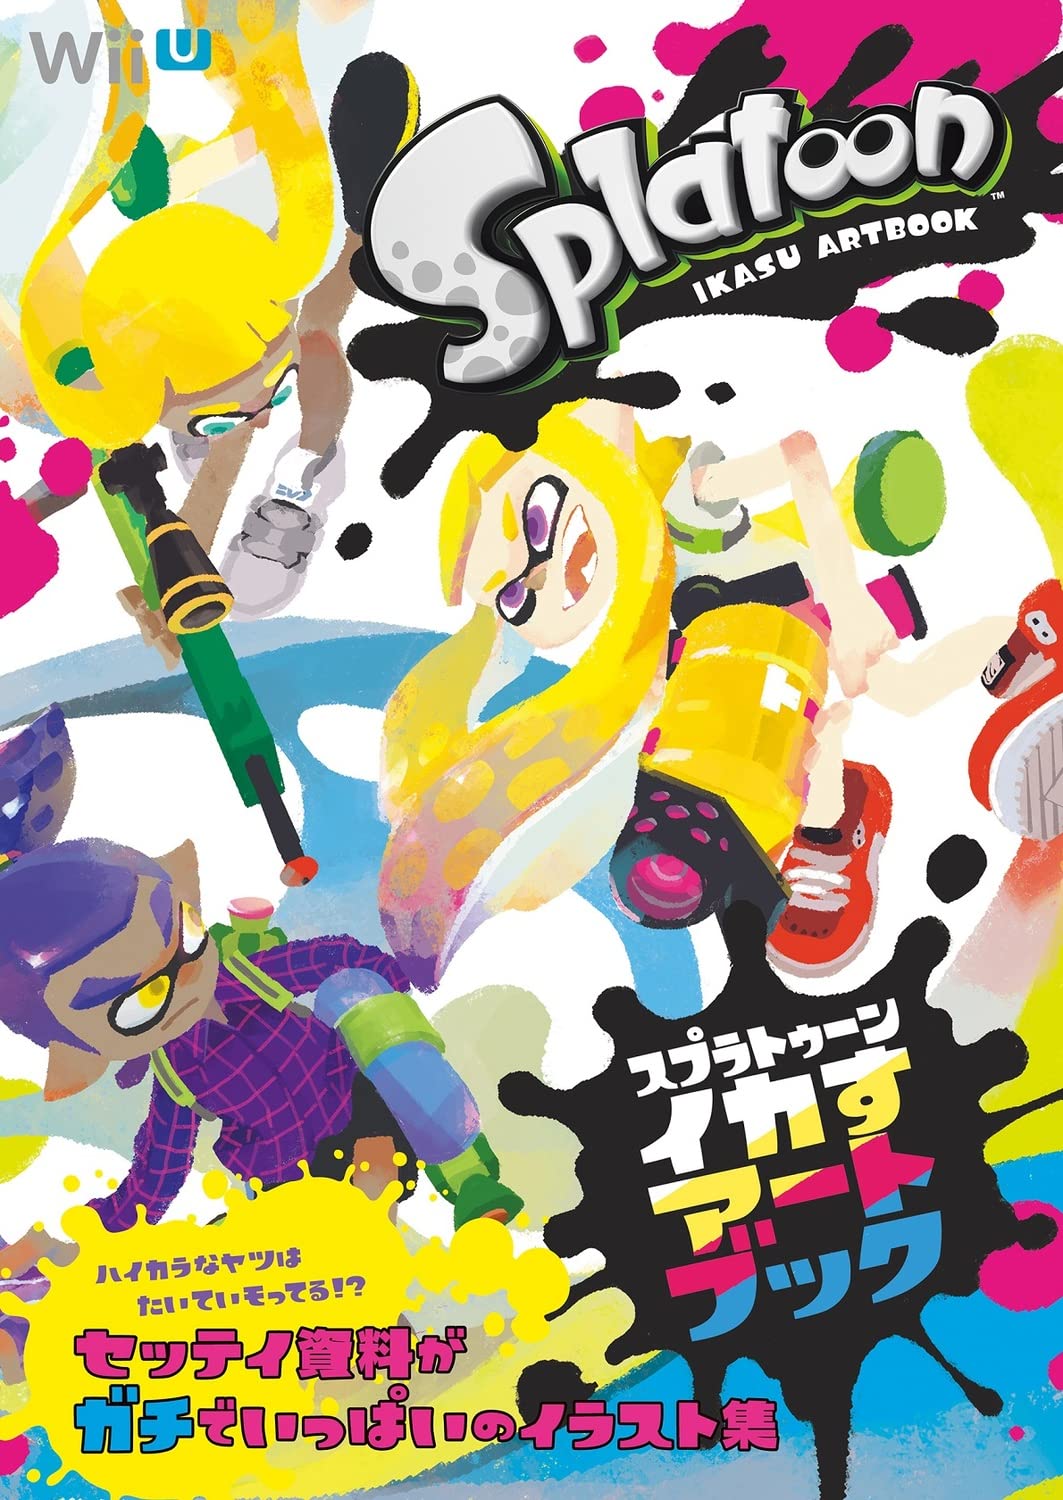 Splatoon IKASU ART BOOK KADOKAWA Enter Frain Illustrations by Famitsu